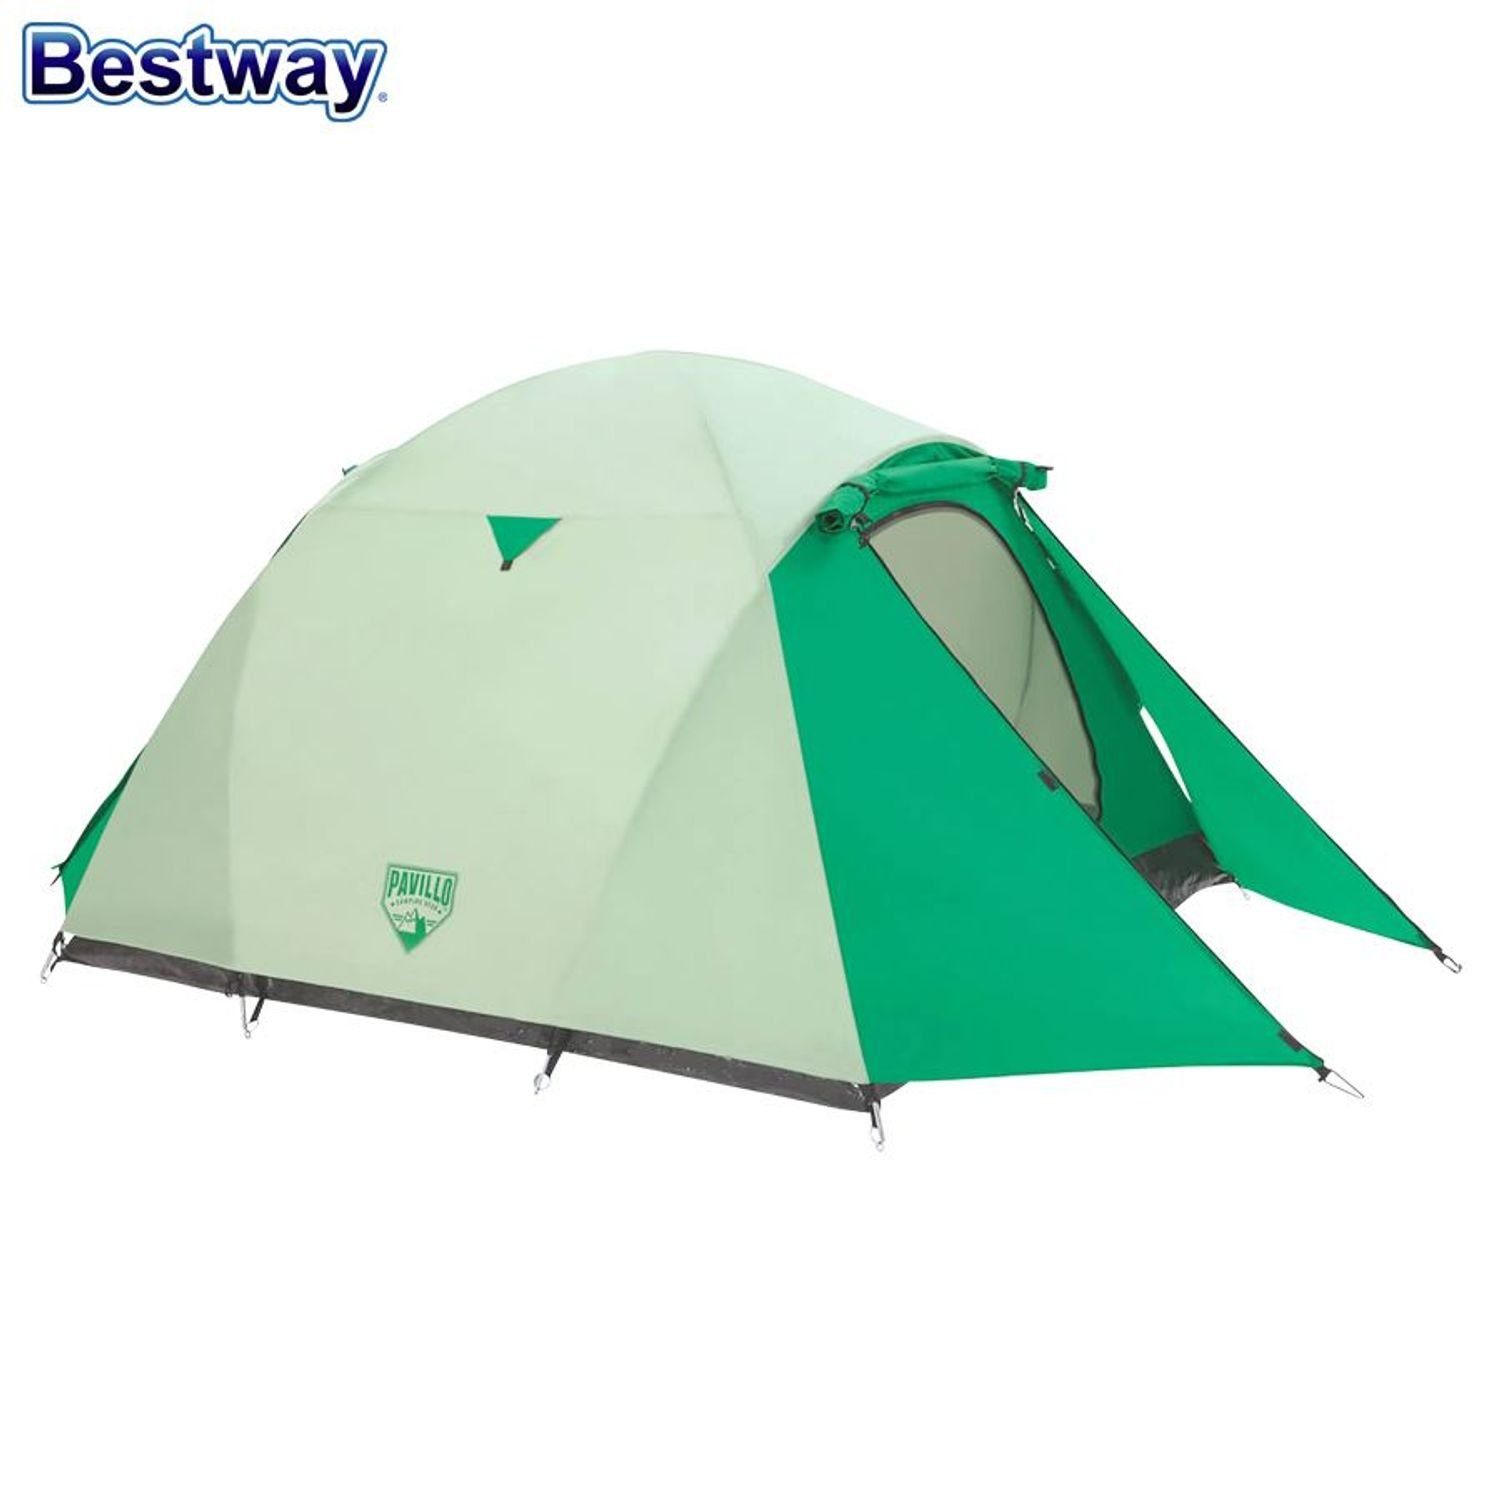 Kuppelzelt Campingzelt Bestway Bestway Cultiva Kuppelzelt Trekking 3 X3 Outdoor Igluzelt